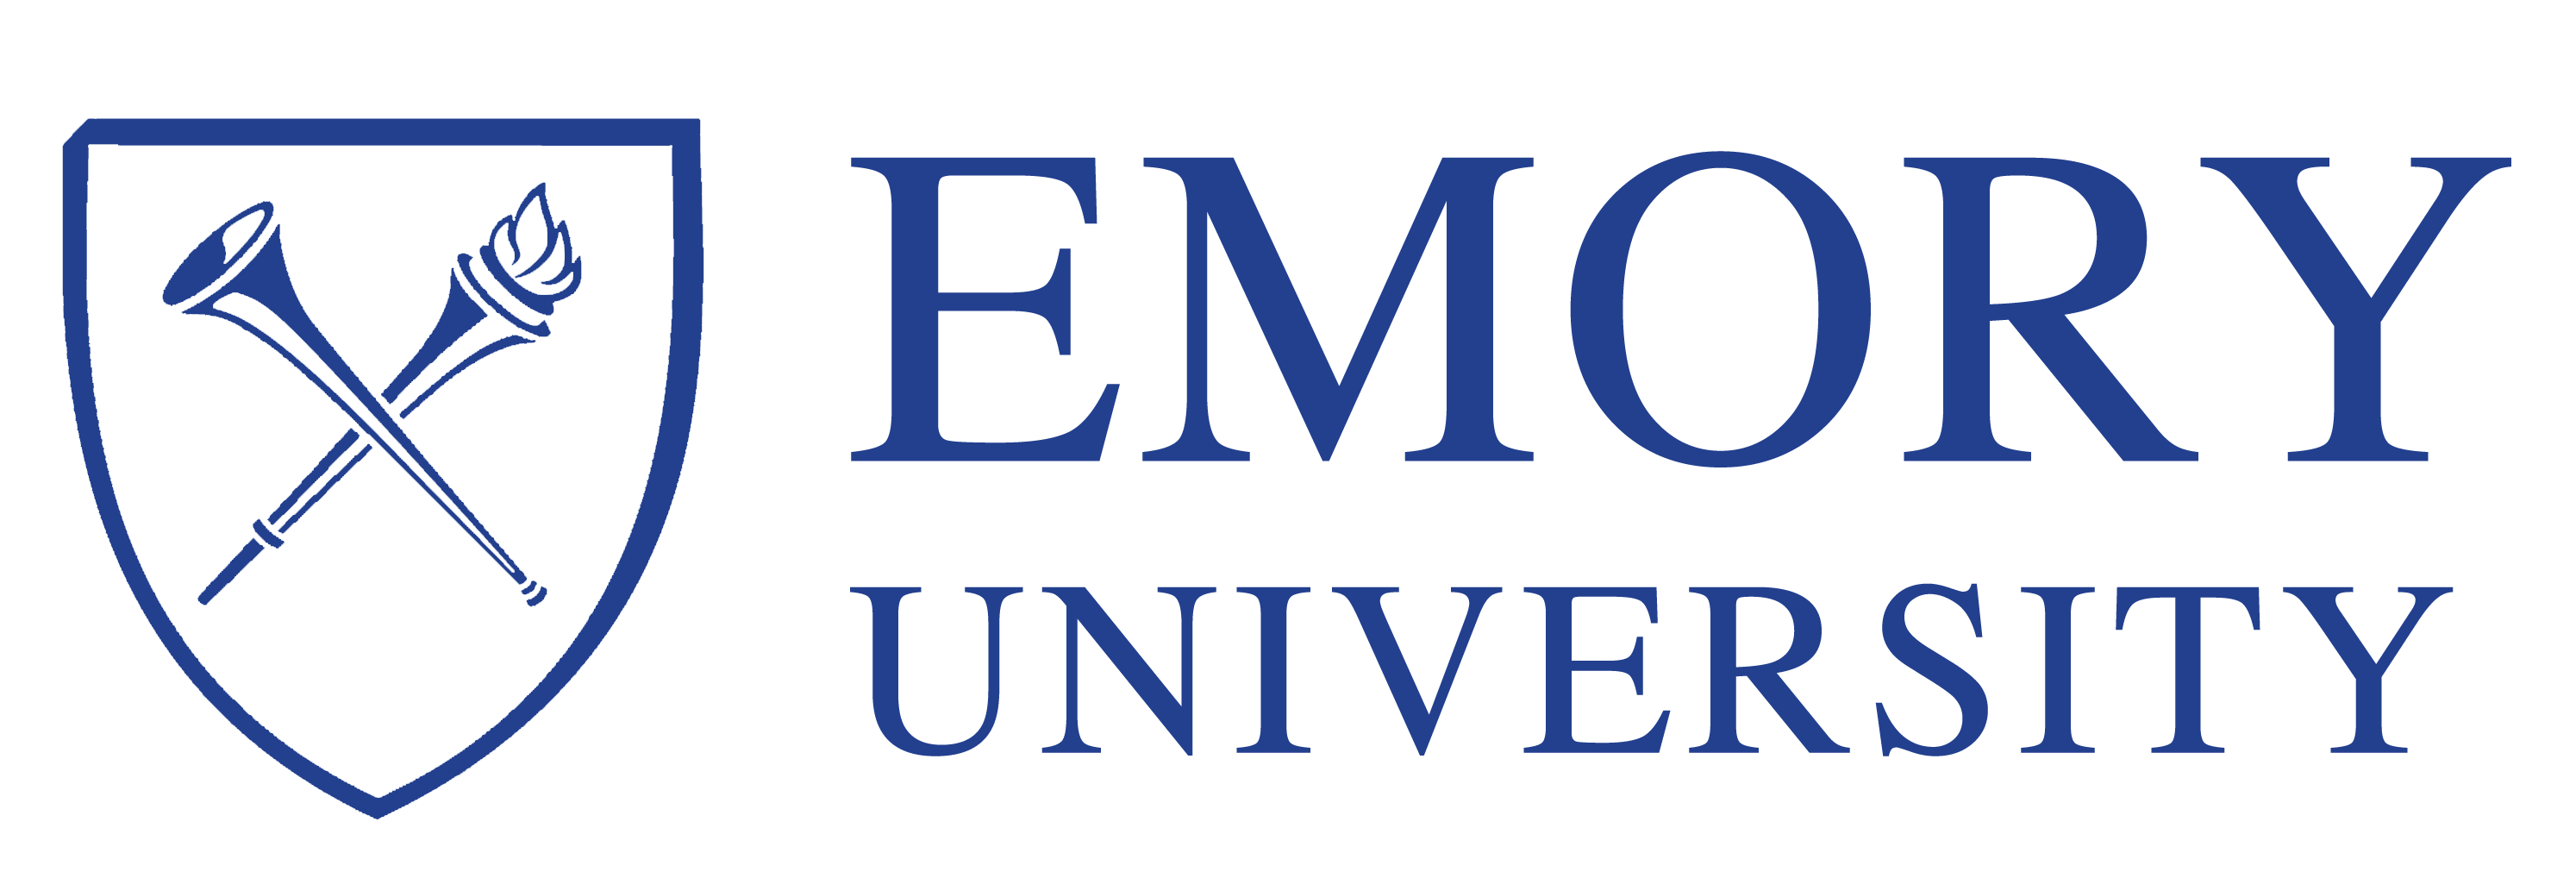 Emory University - Goizueta Business School